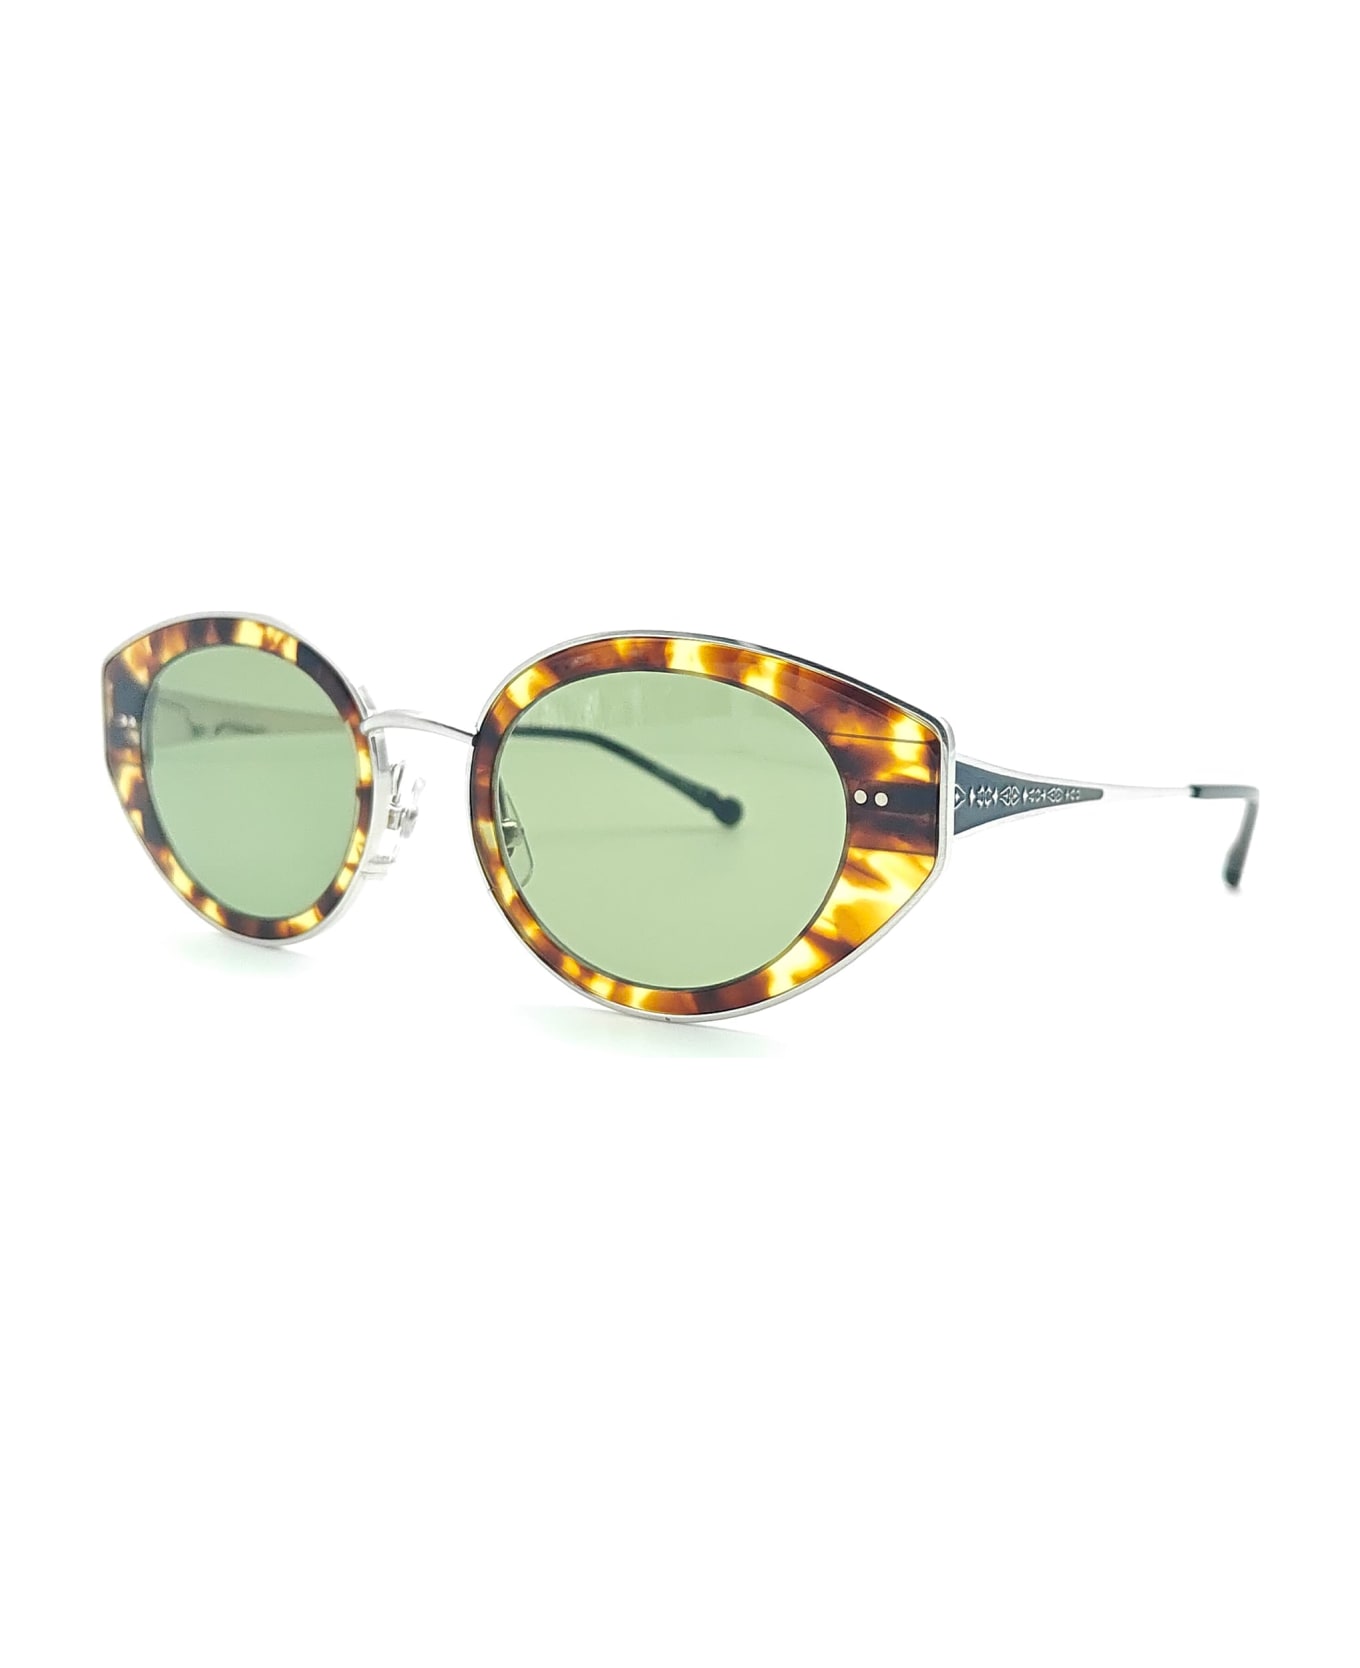 Matsuda M3120 - Tortoise / Brushed Silver Sunglasses - Tortoise/silver